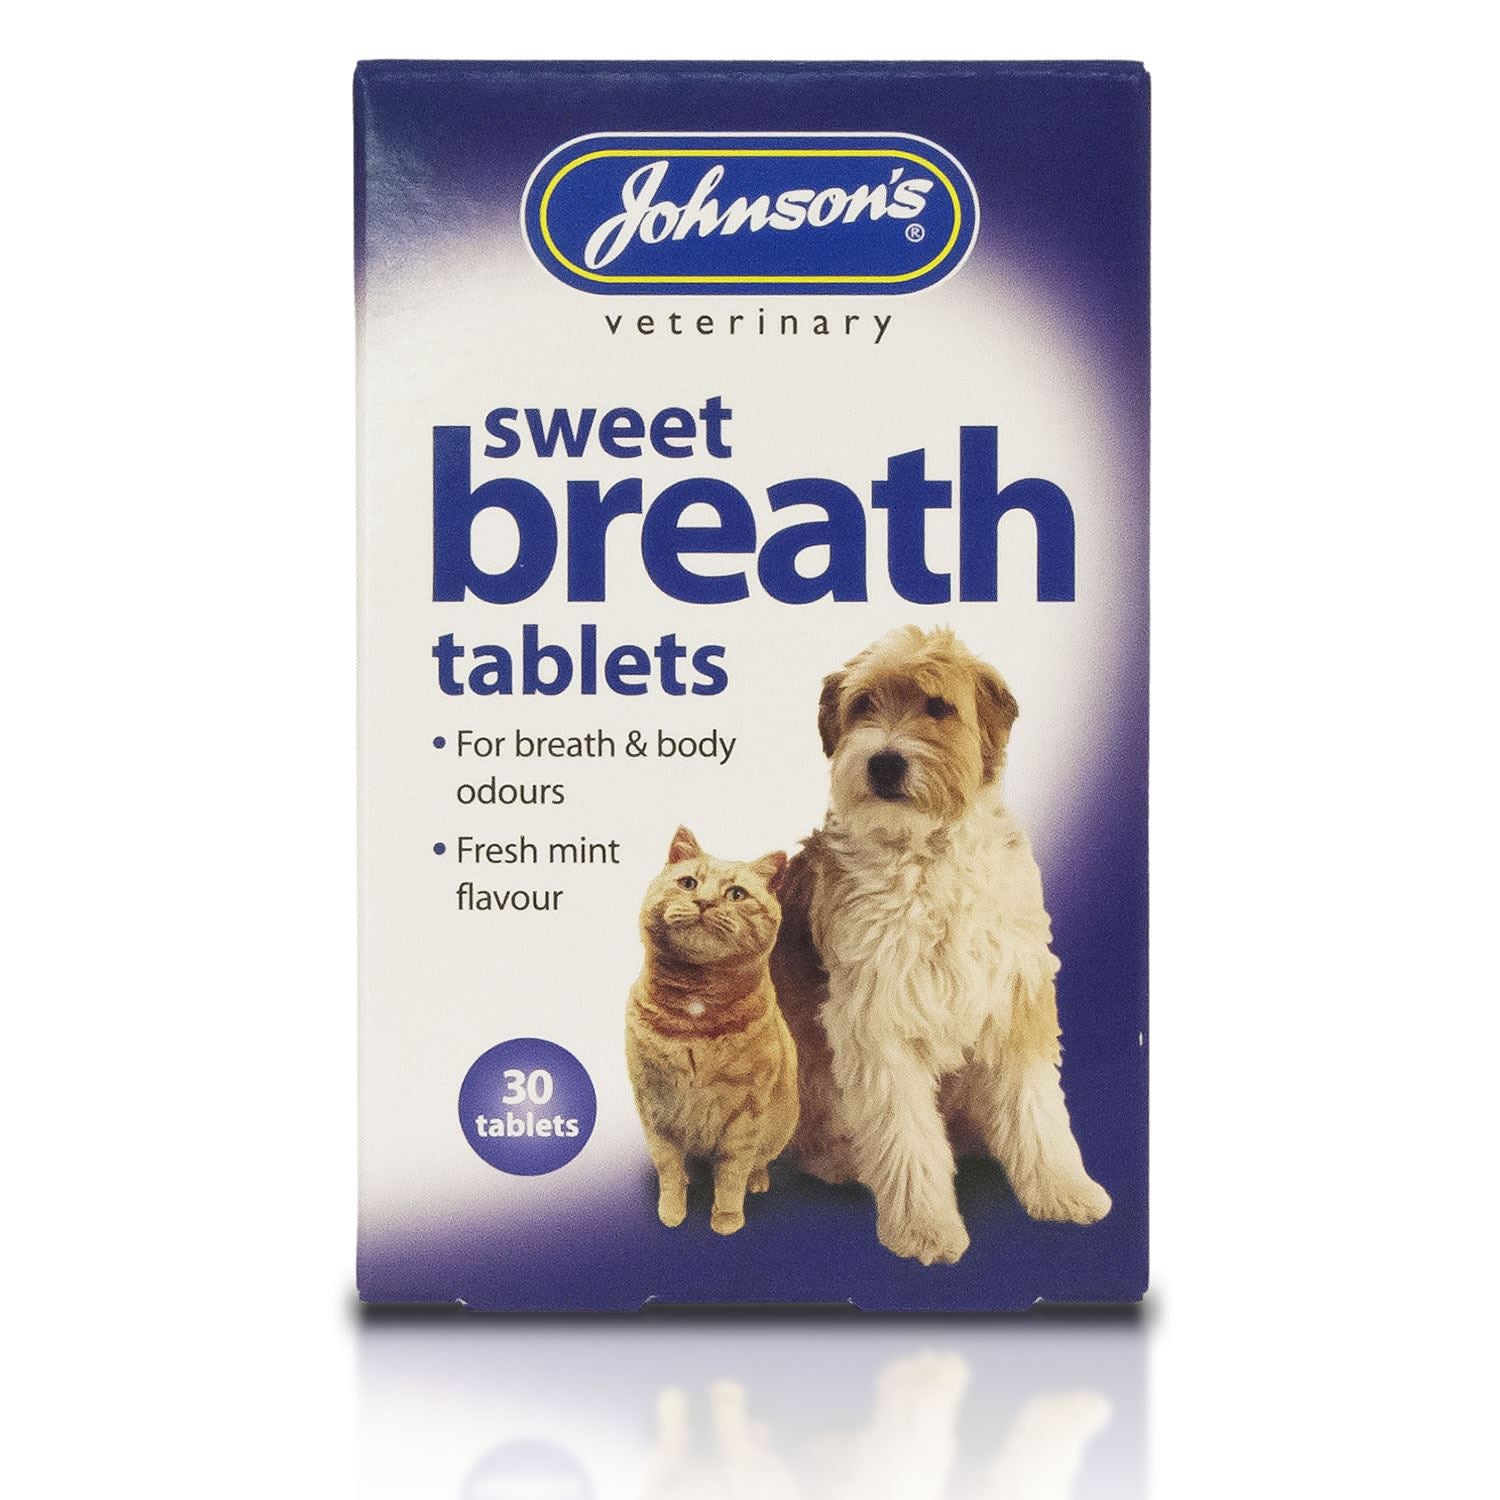 JohnsonS Veterinary Sweet Breath Tablets - Just Horse Riders